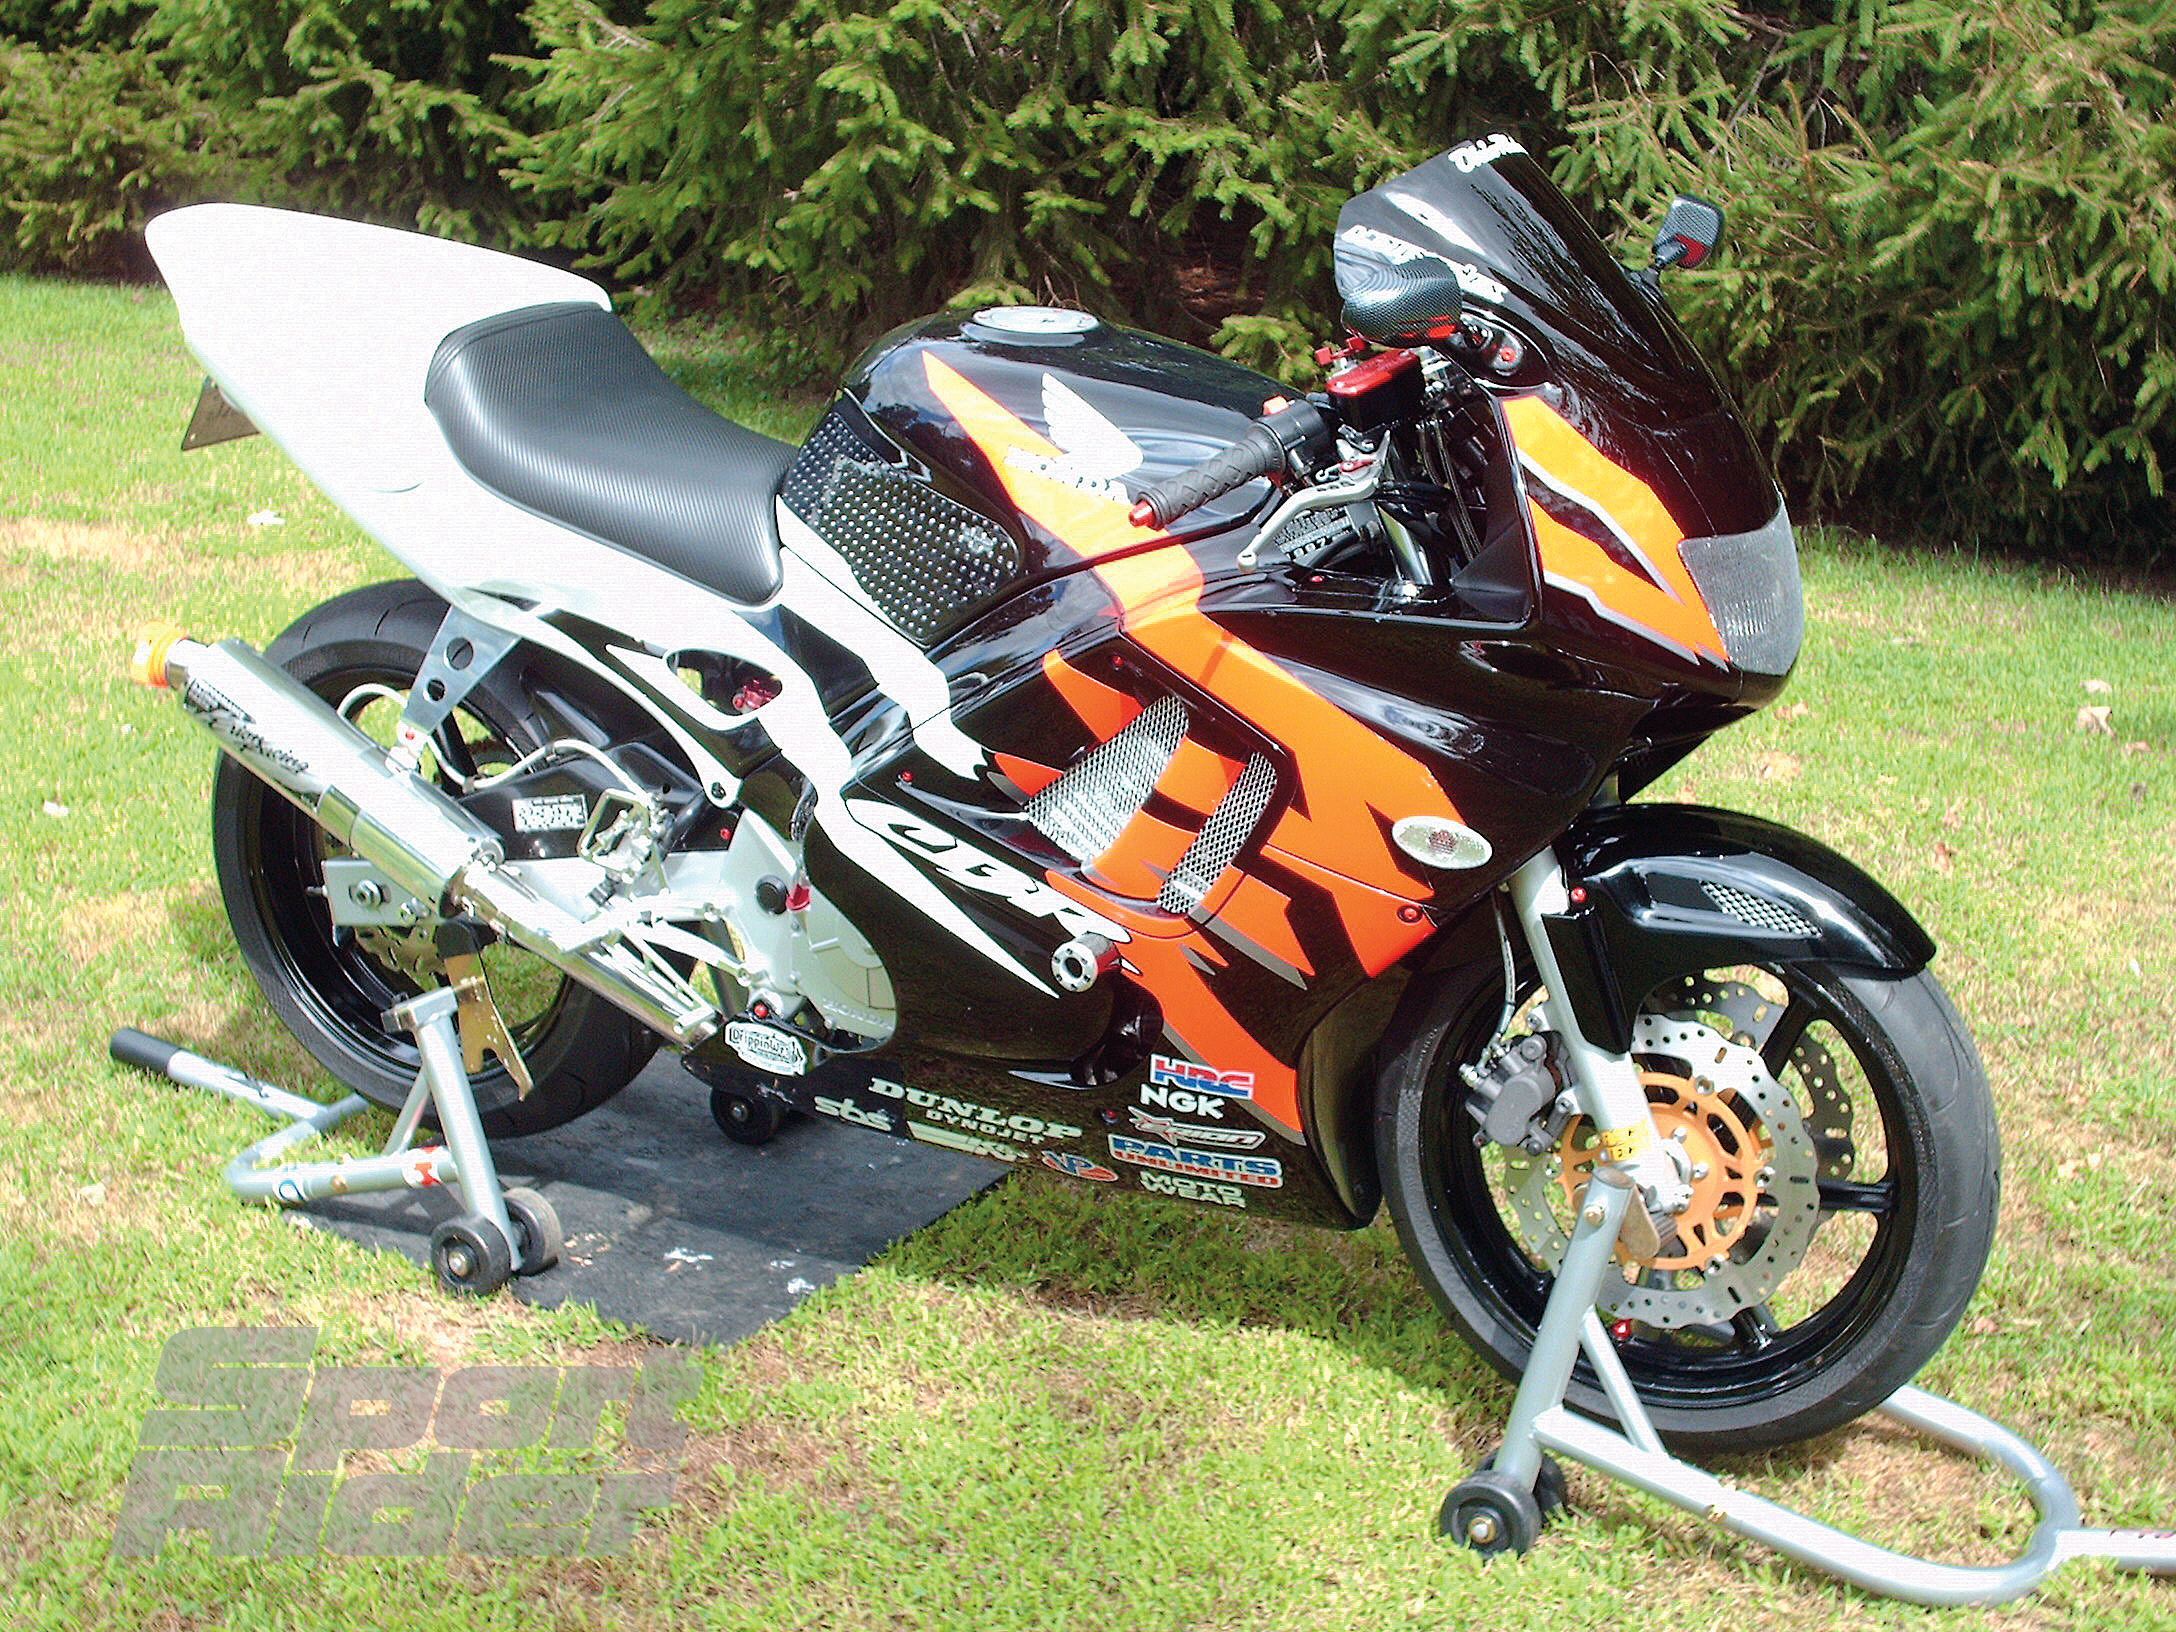 STD 65mm Motorcycle Engine Piston and Ring Kit For HONDA CBR600 CBR 600 CBR600F2 91-94 CBR600F3 95-98 